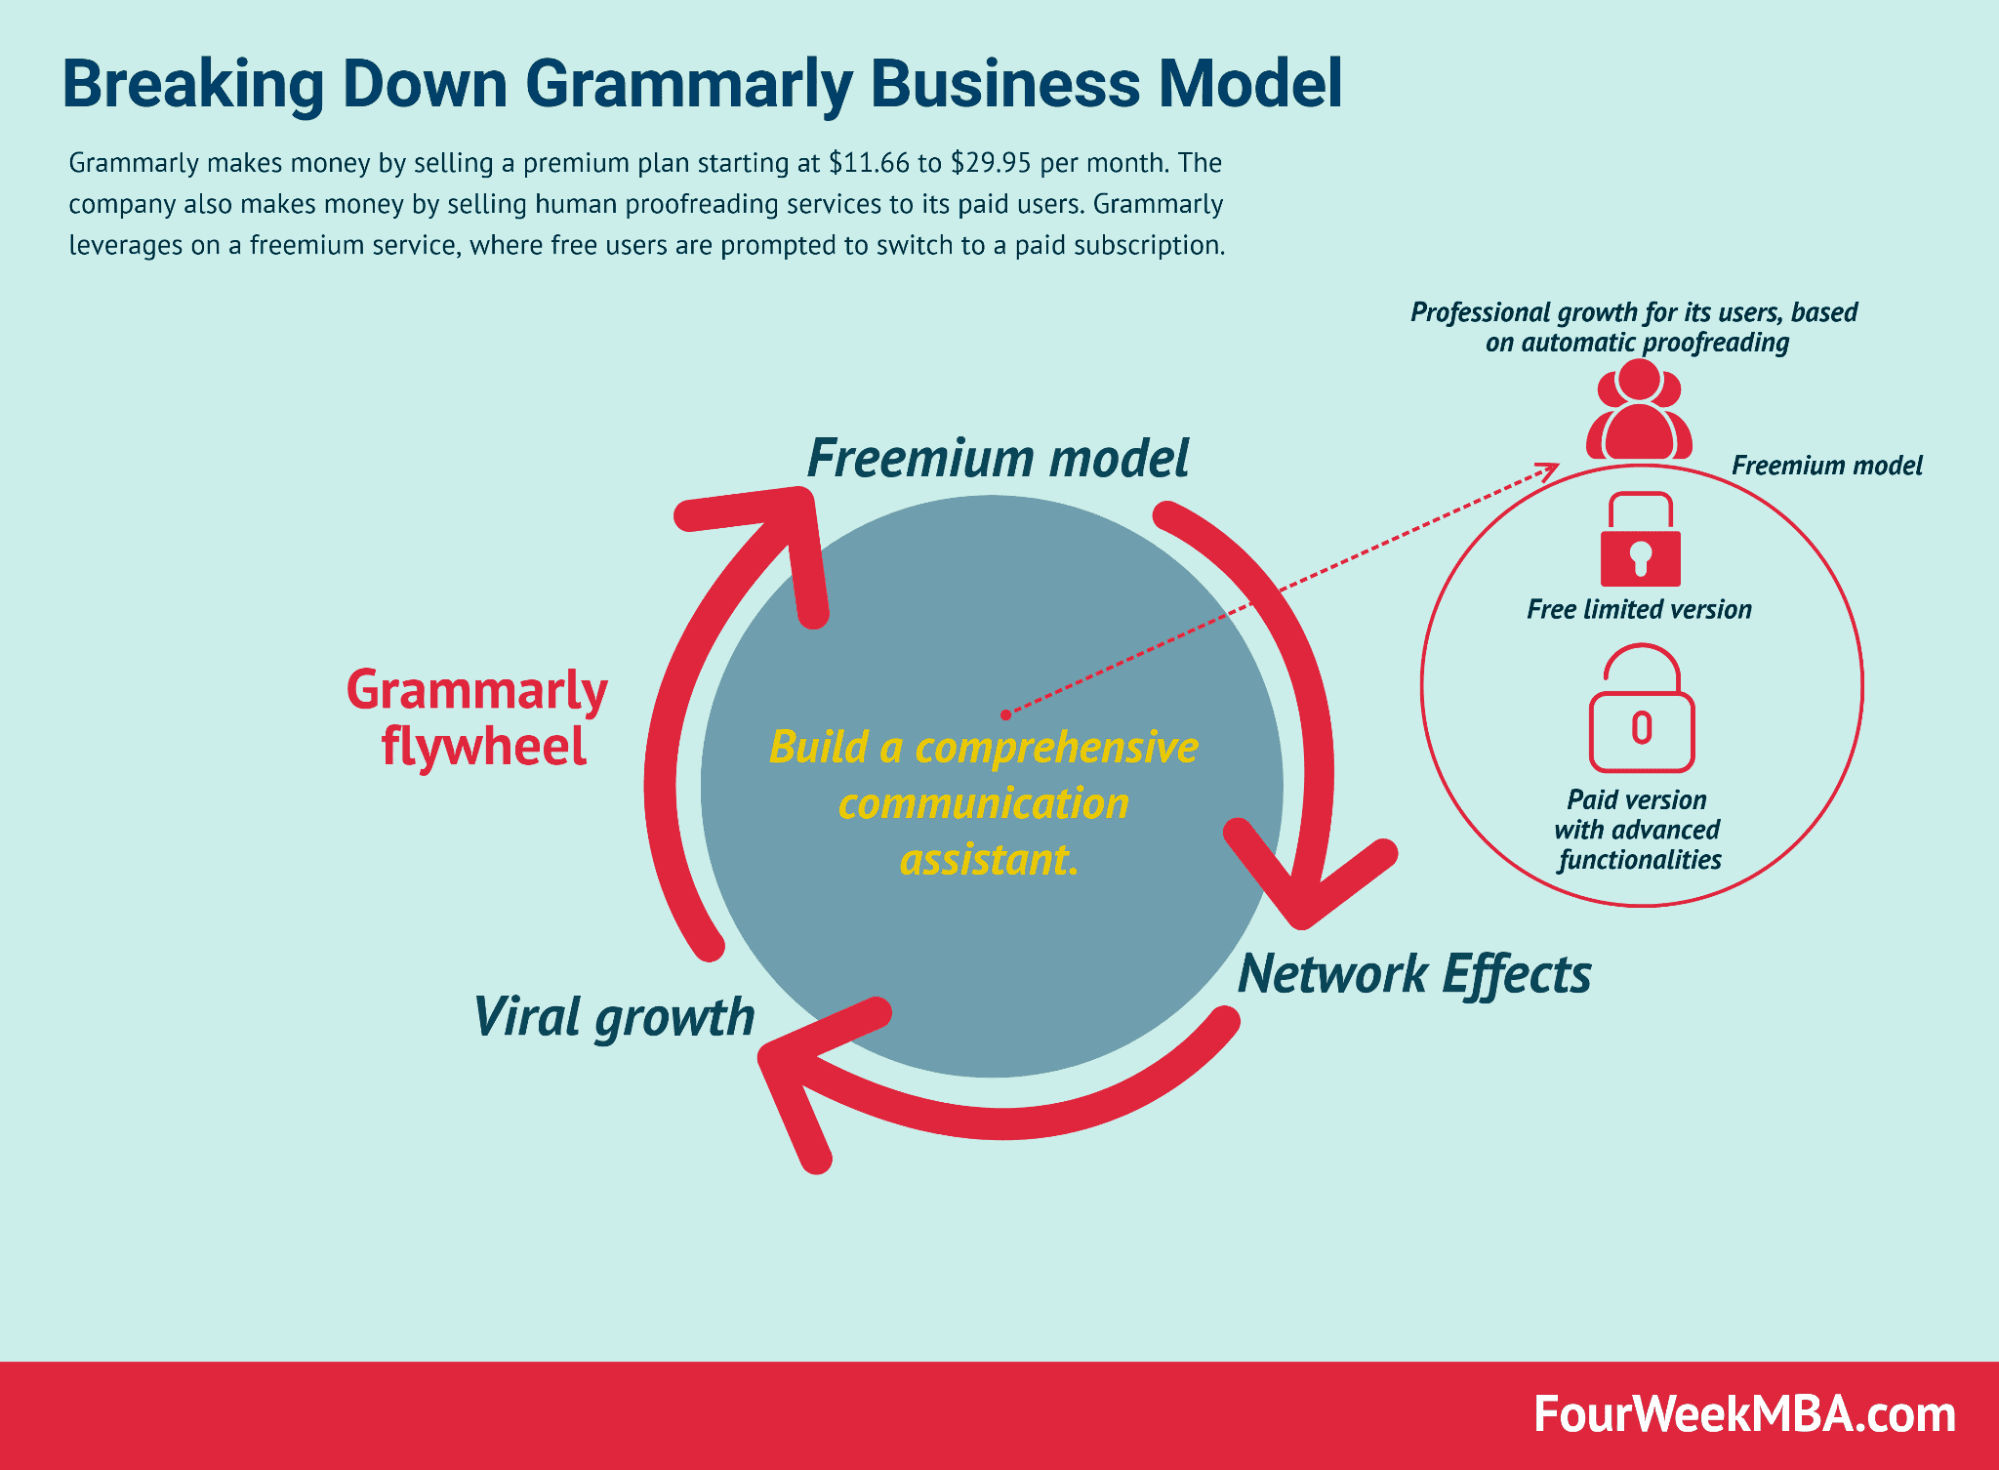 Breaking down grammarly business model